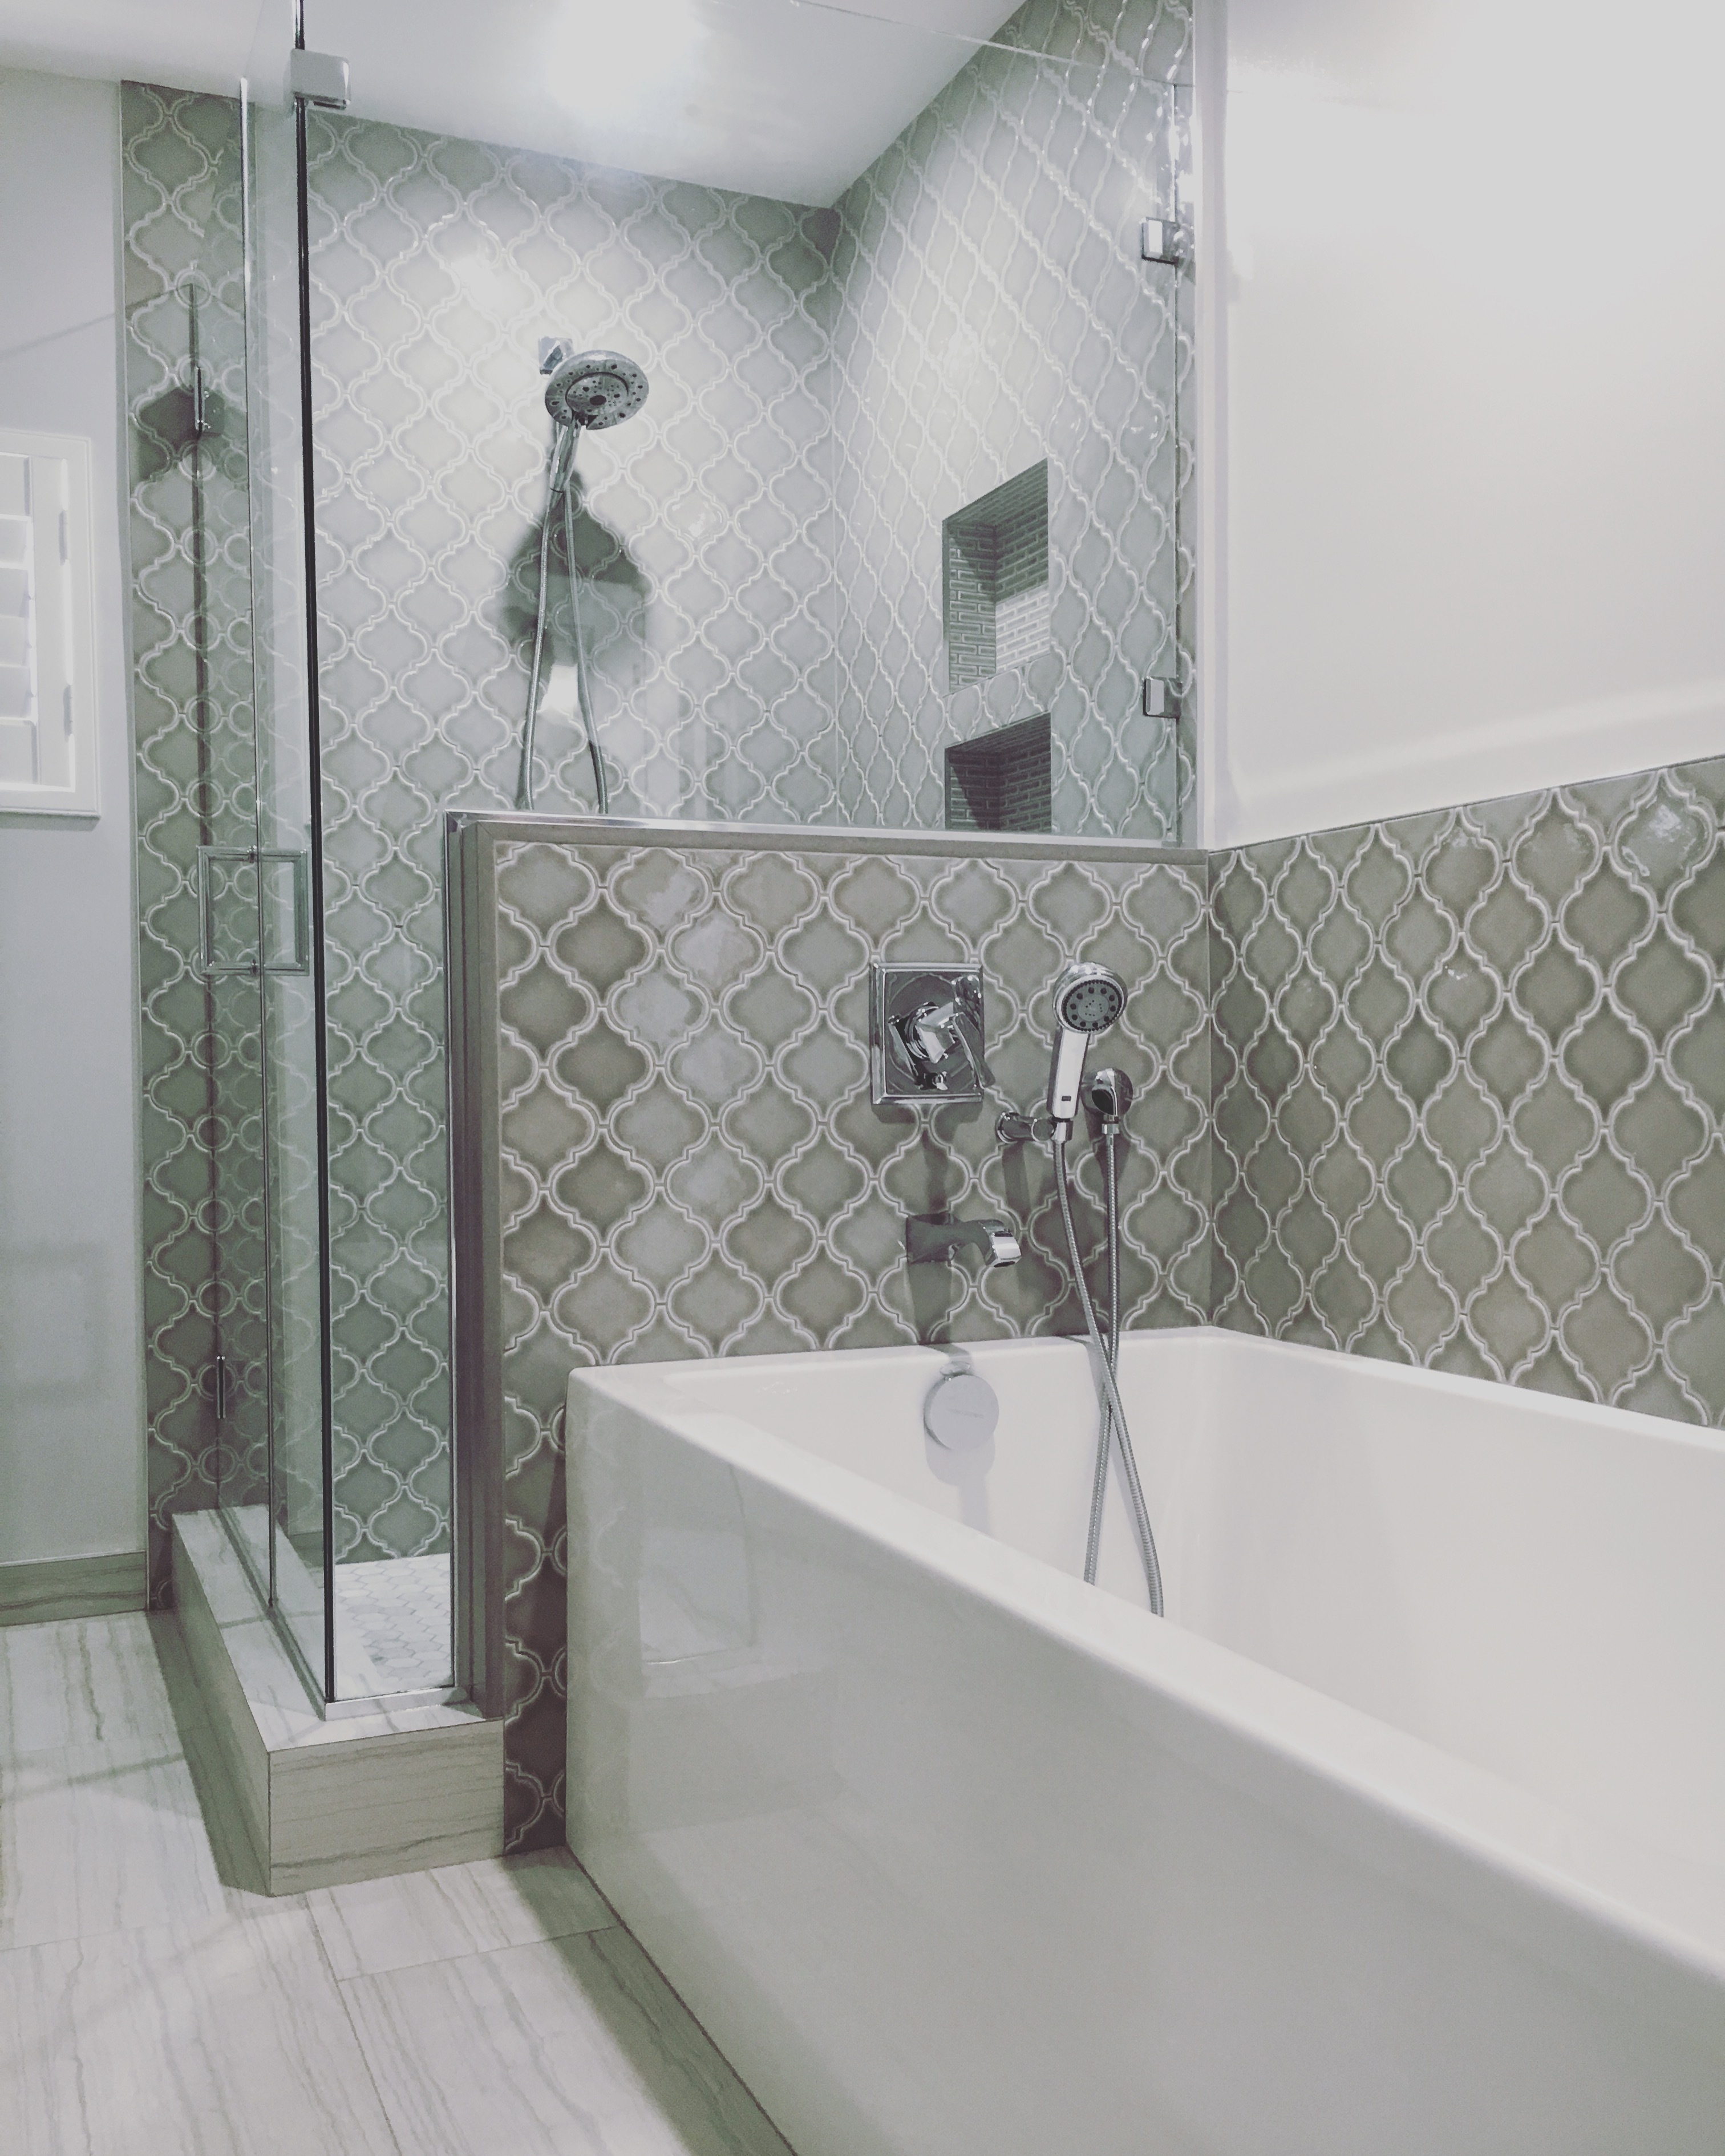 Sebourn Residence: Bathroom Remodel in Manhattan Beach, CA